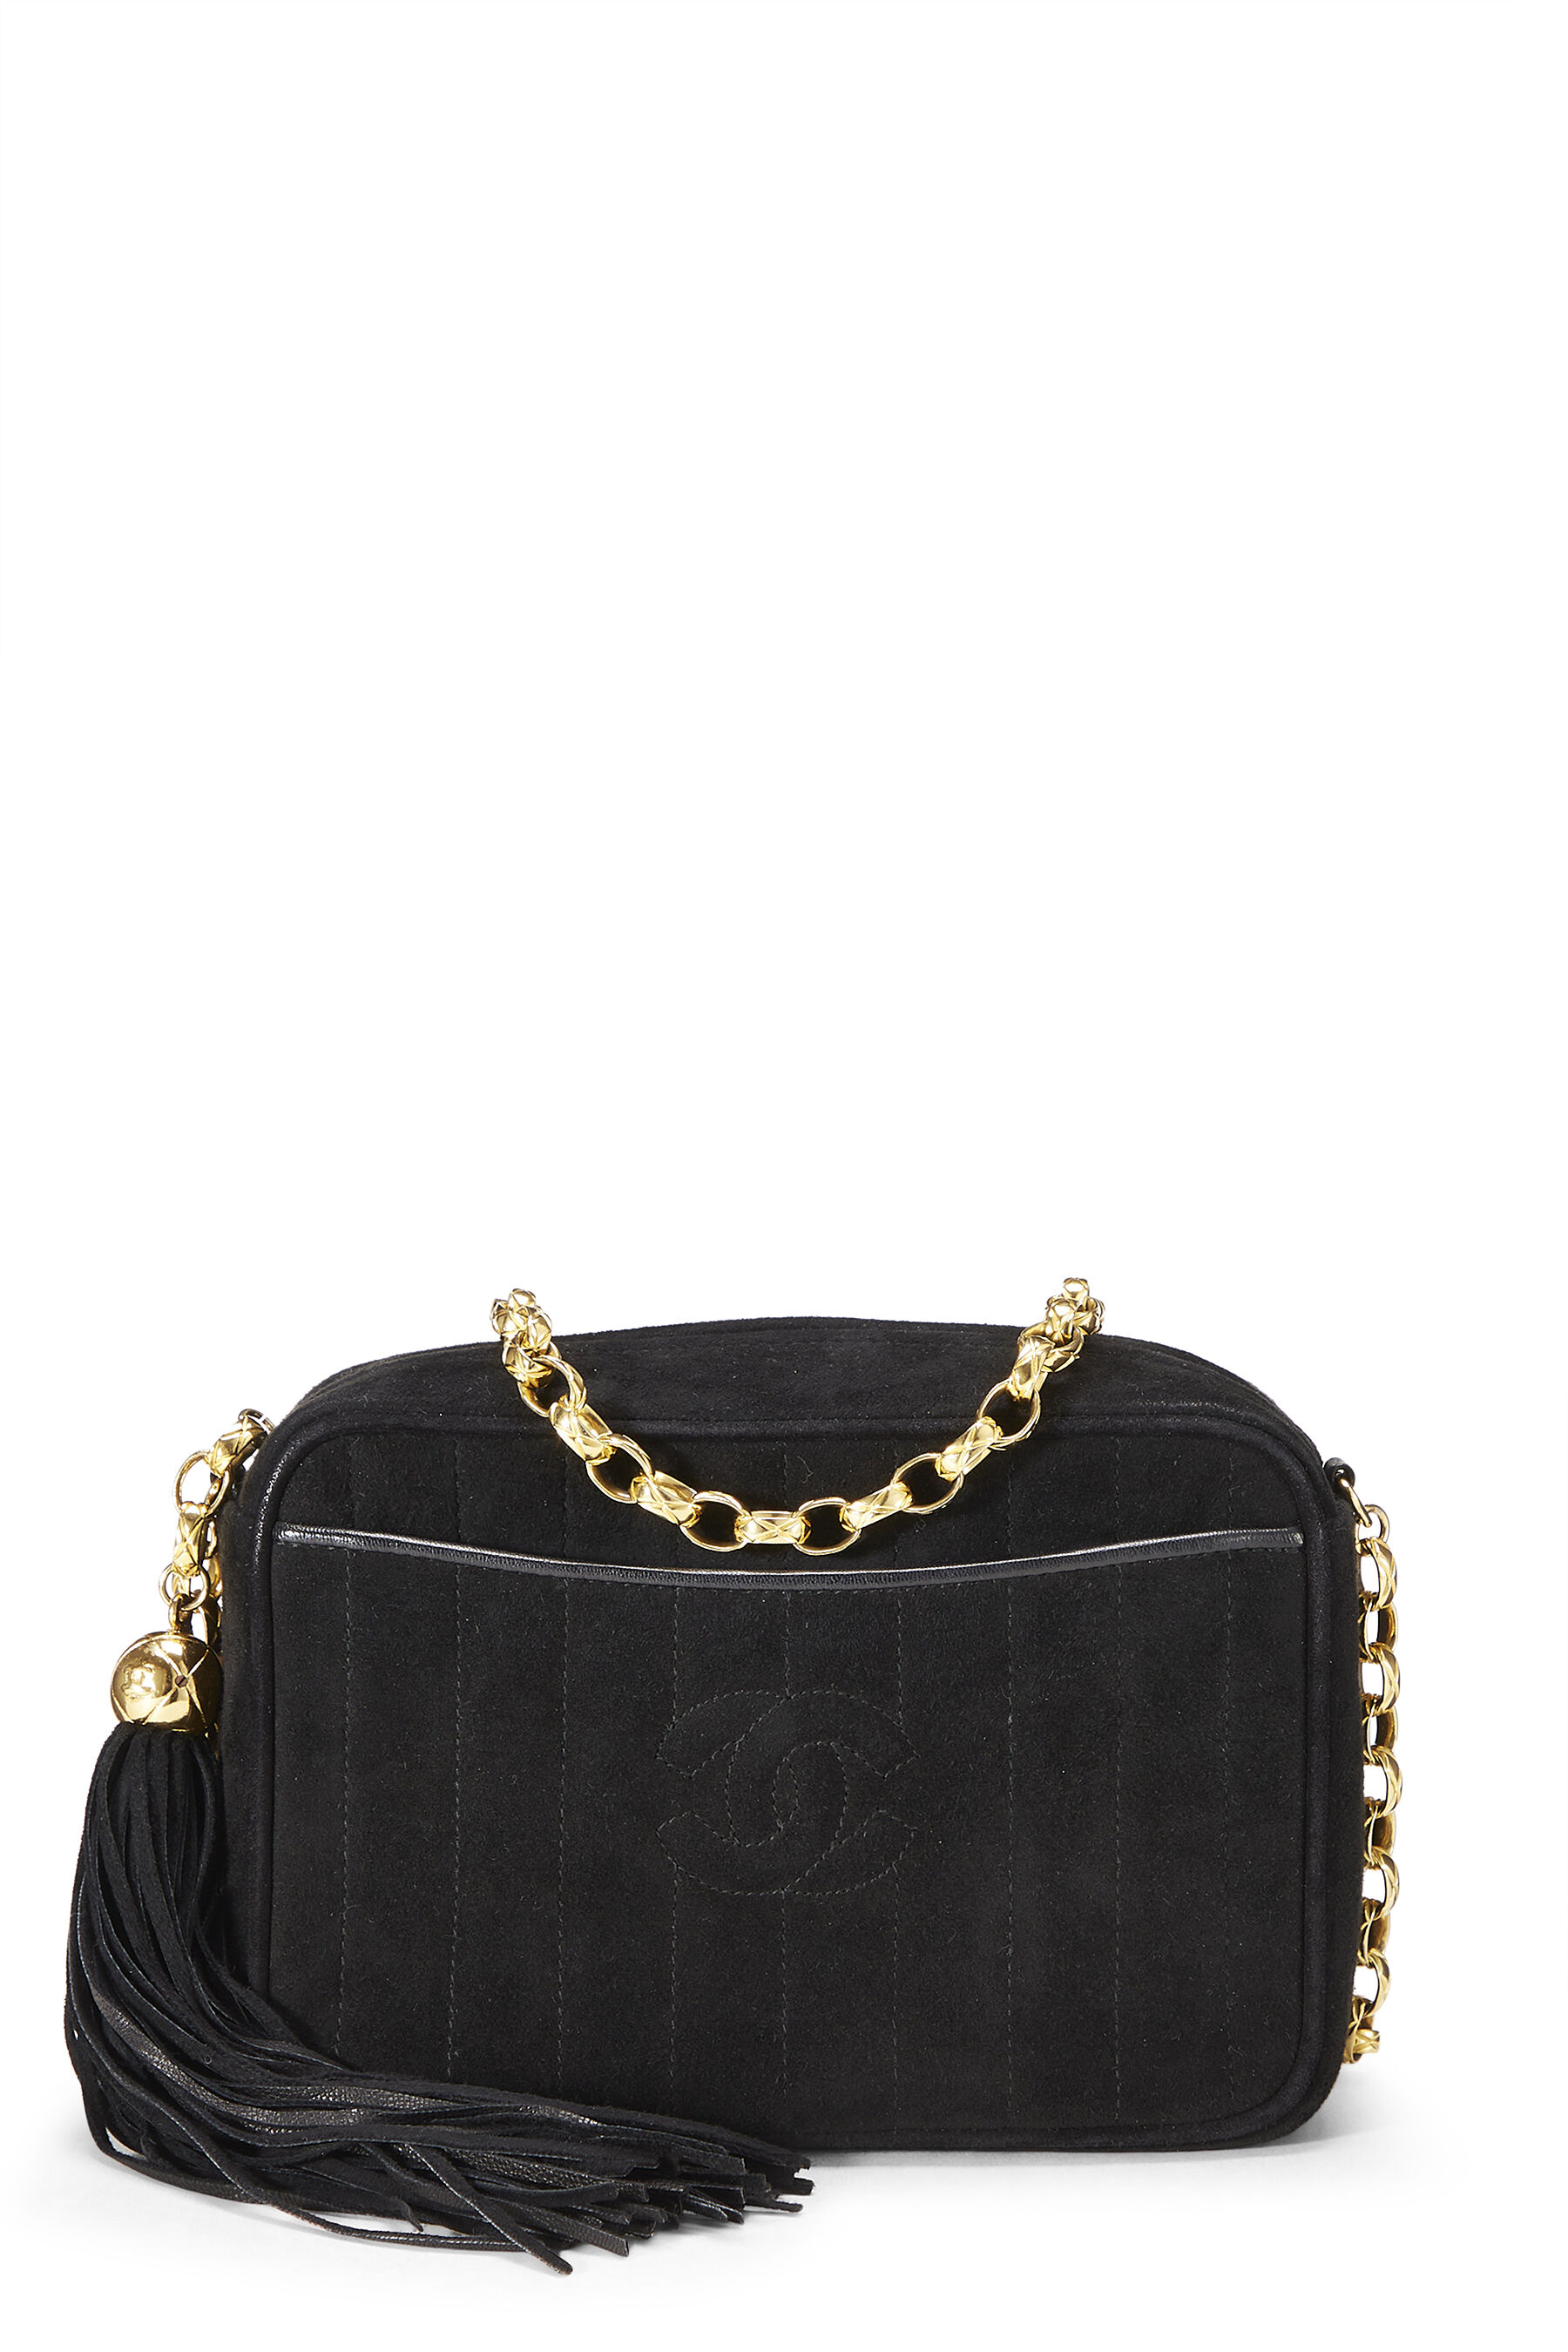 Tassel Chanel Bag 